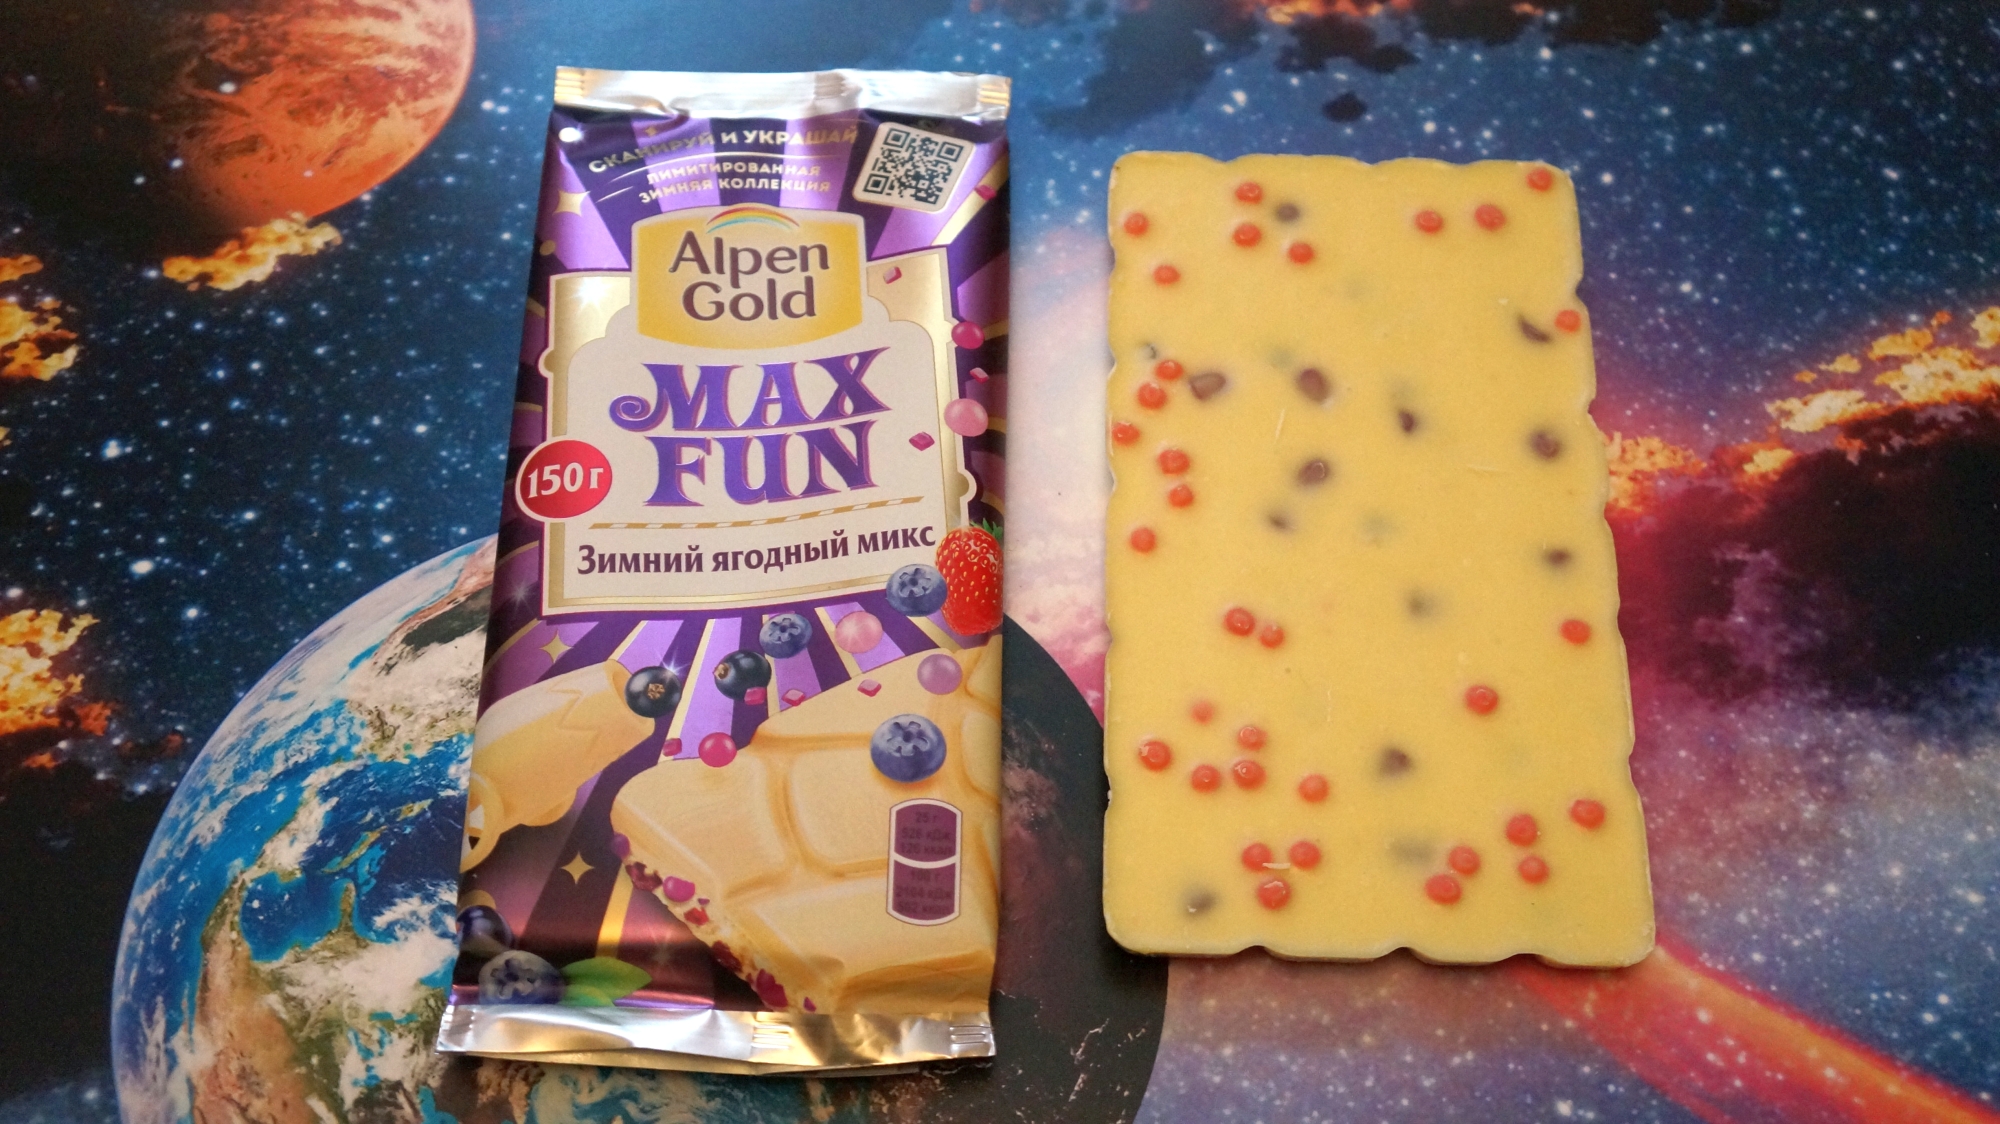 Шоколад Alpen Gold Max Fun Зимний ягодный микс